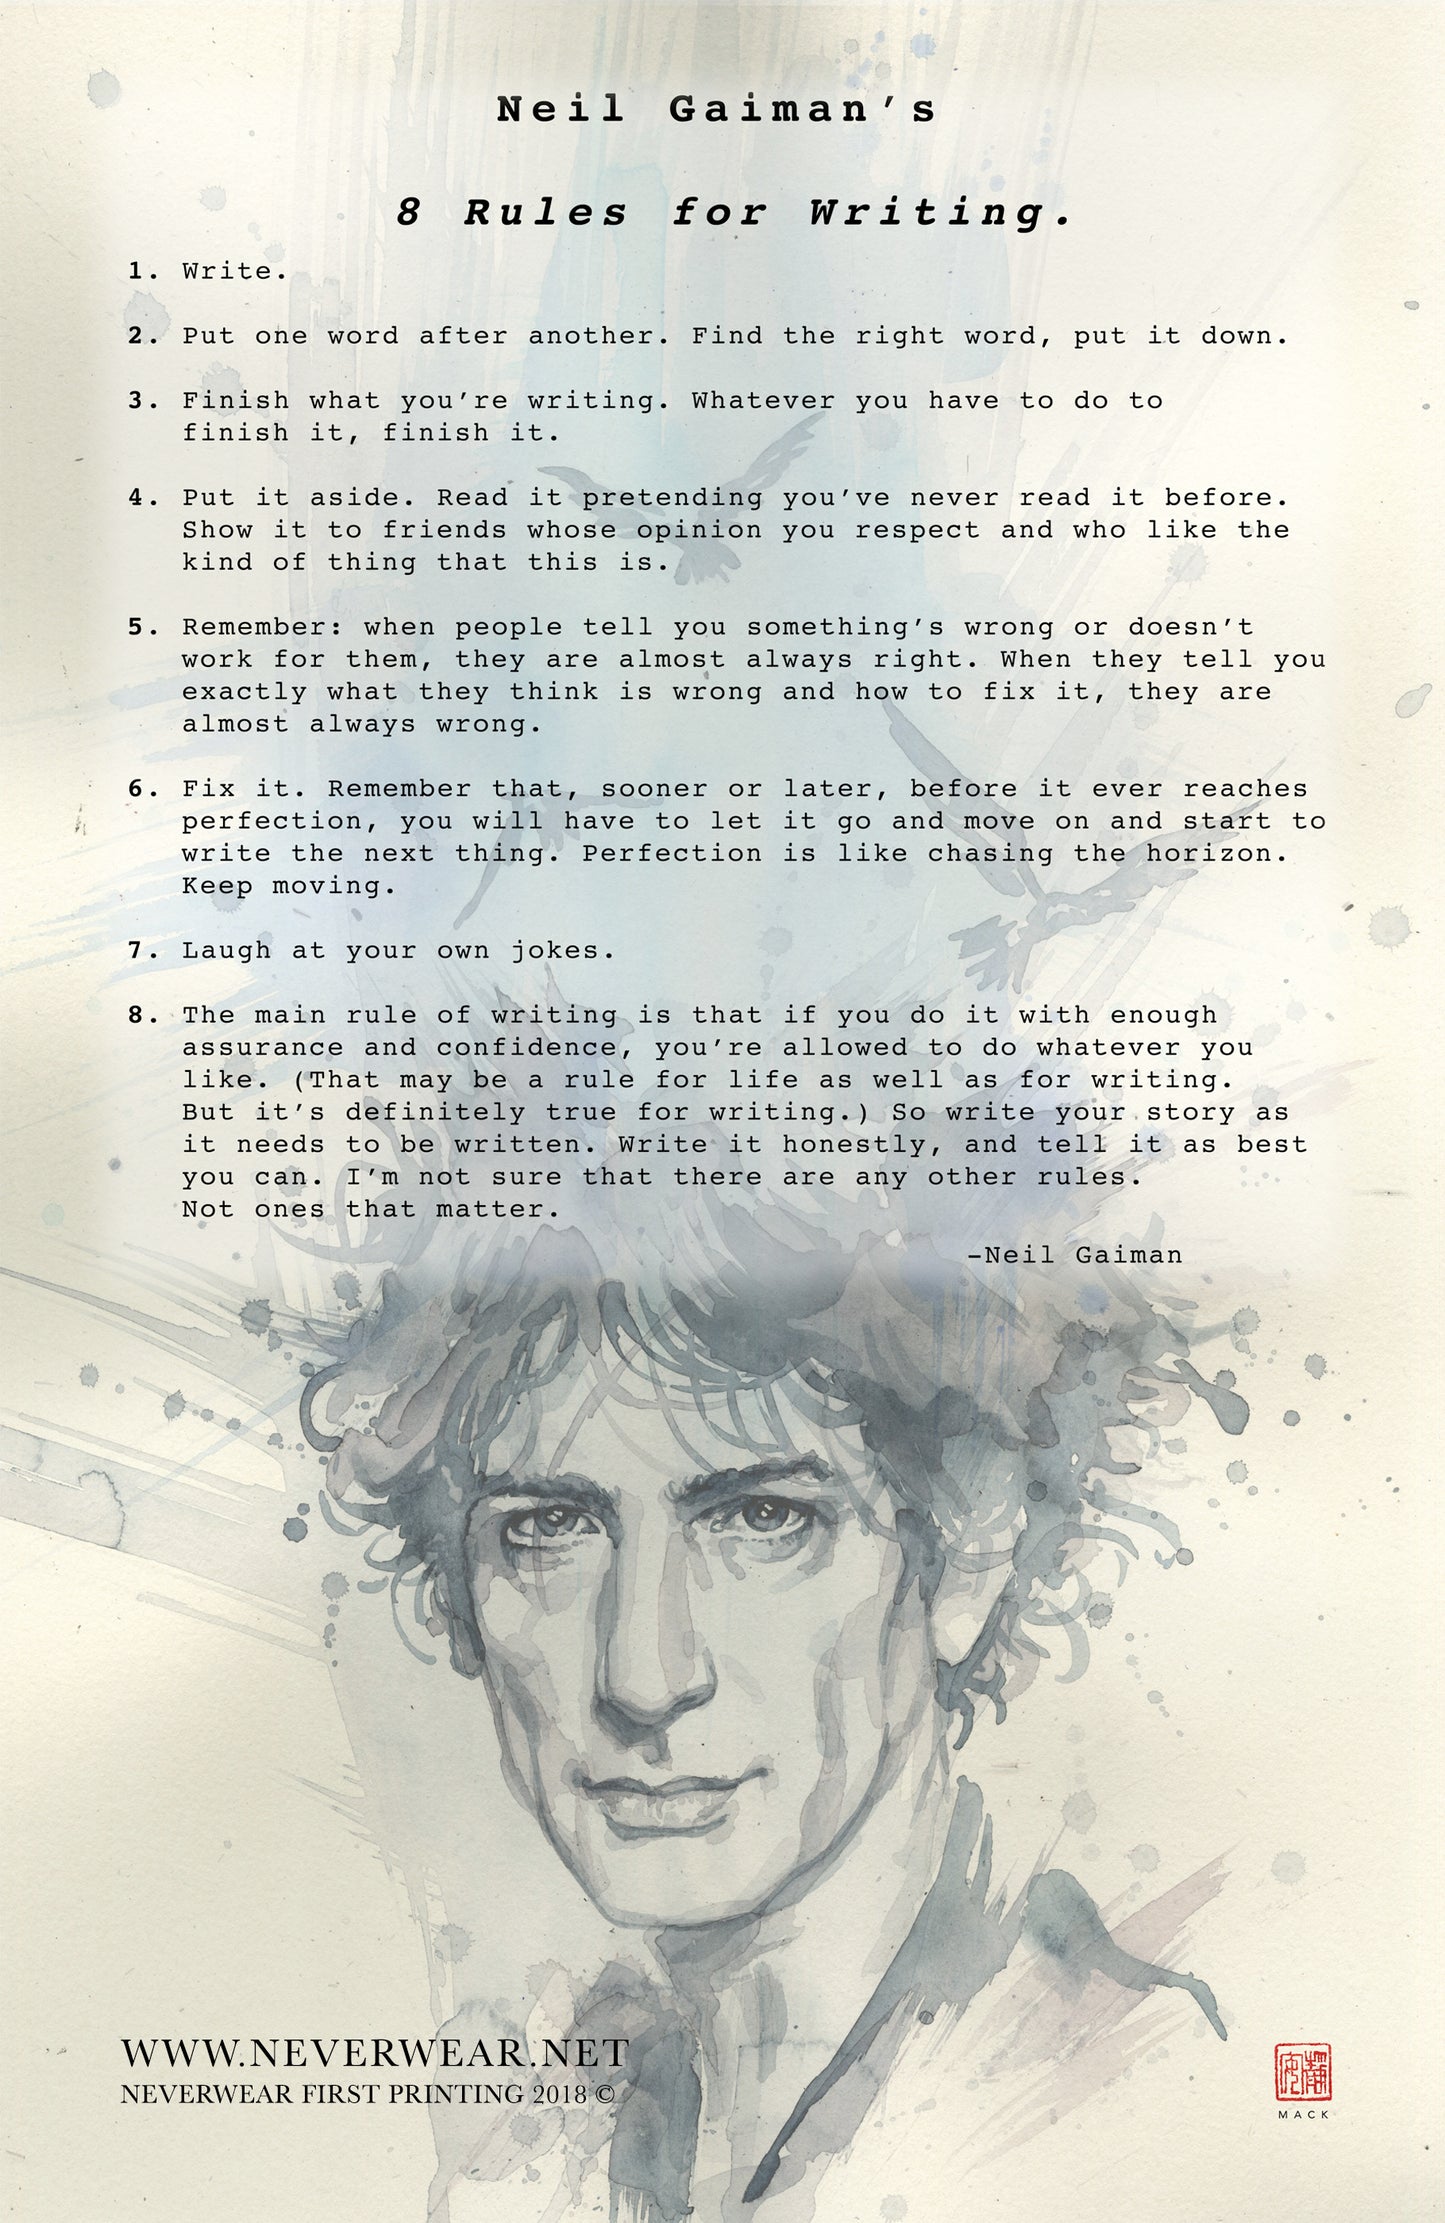 Neil Gaiman's 8 Rules for Writing by David Mack